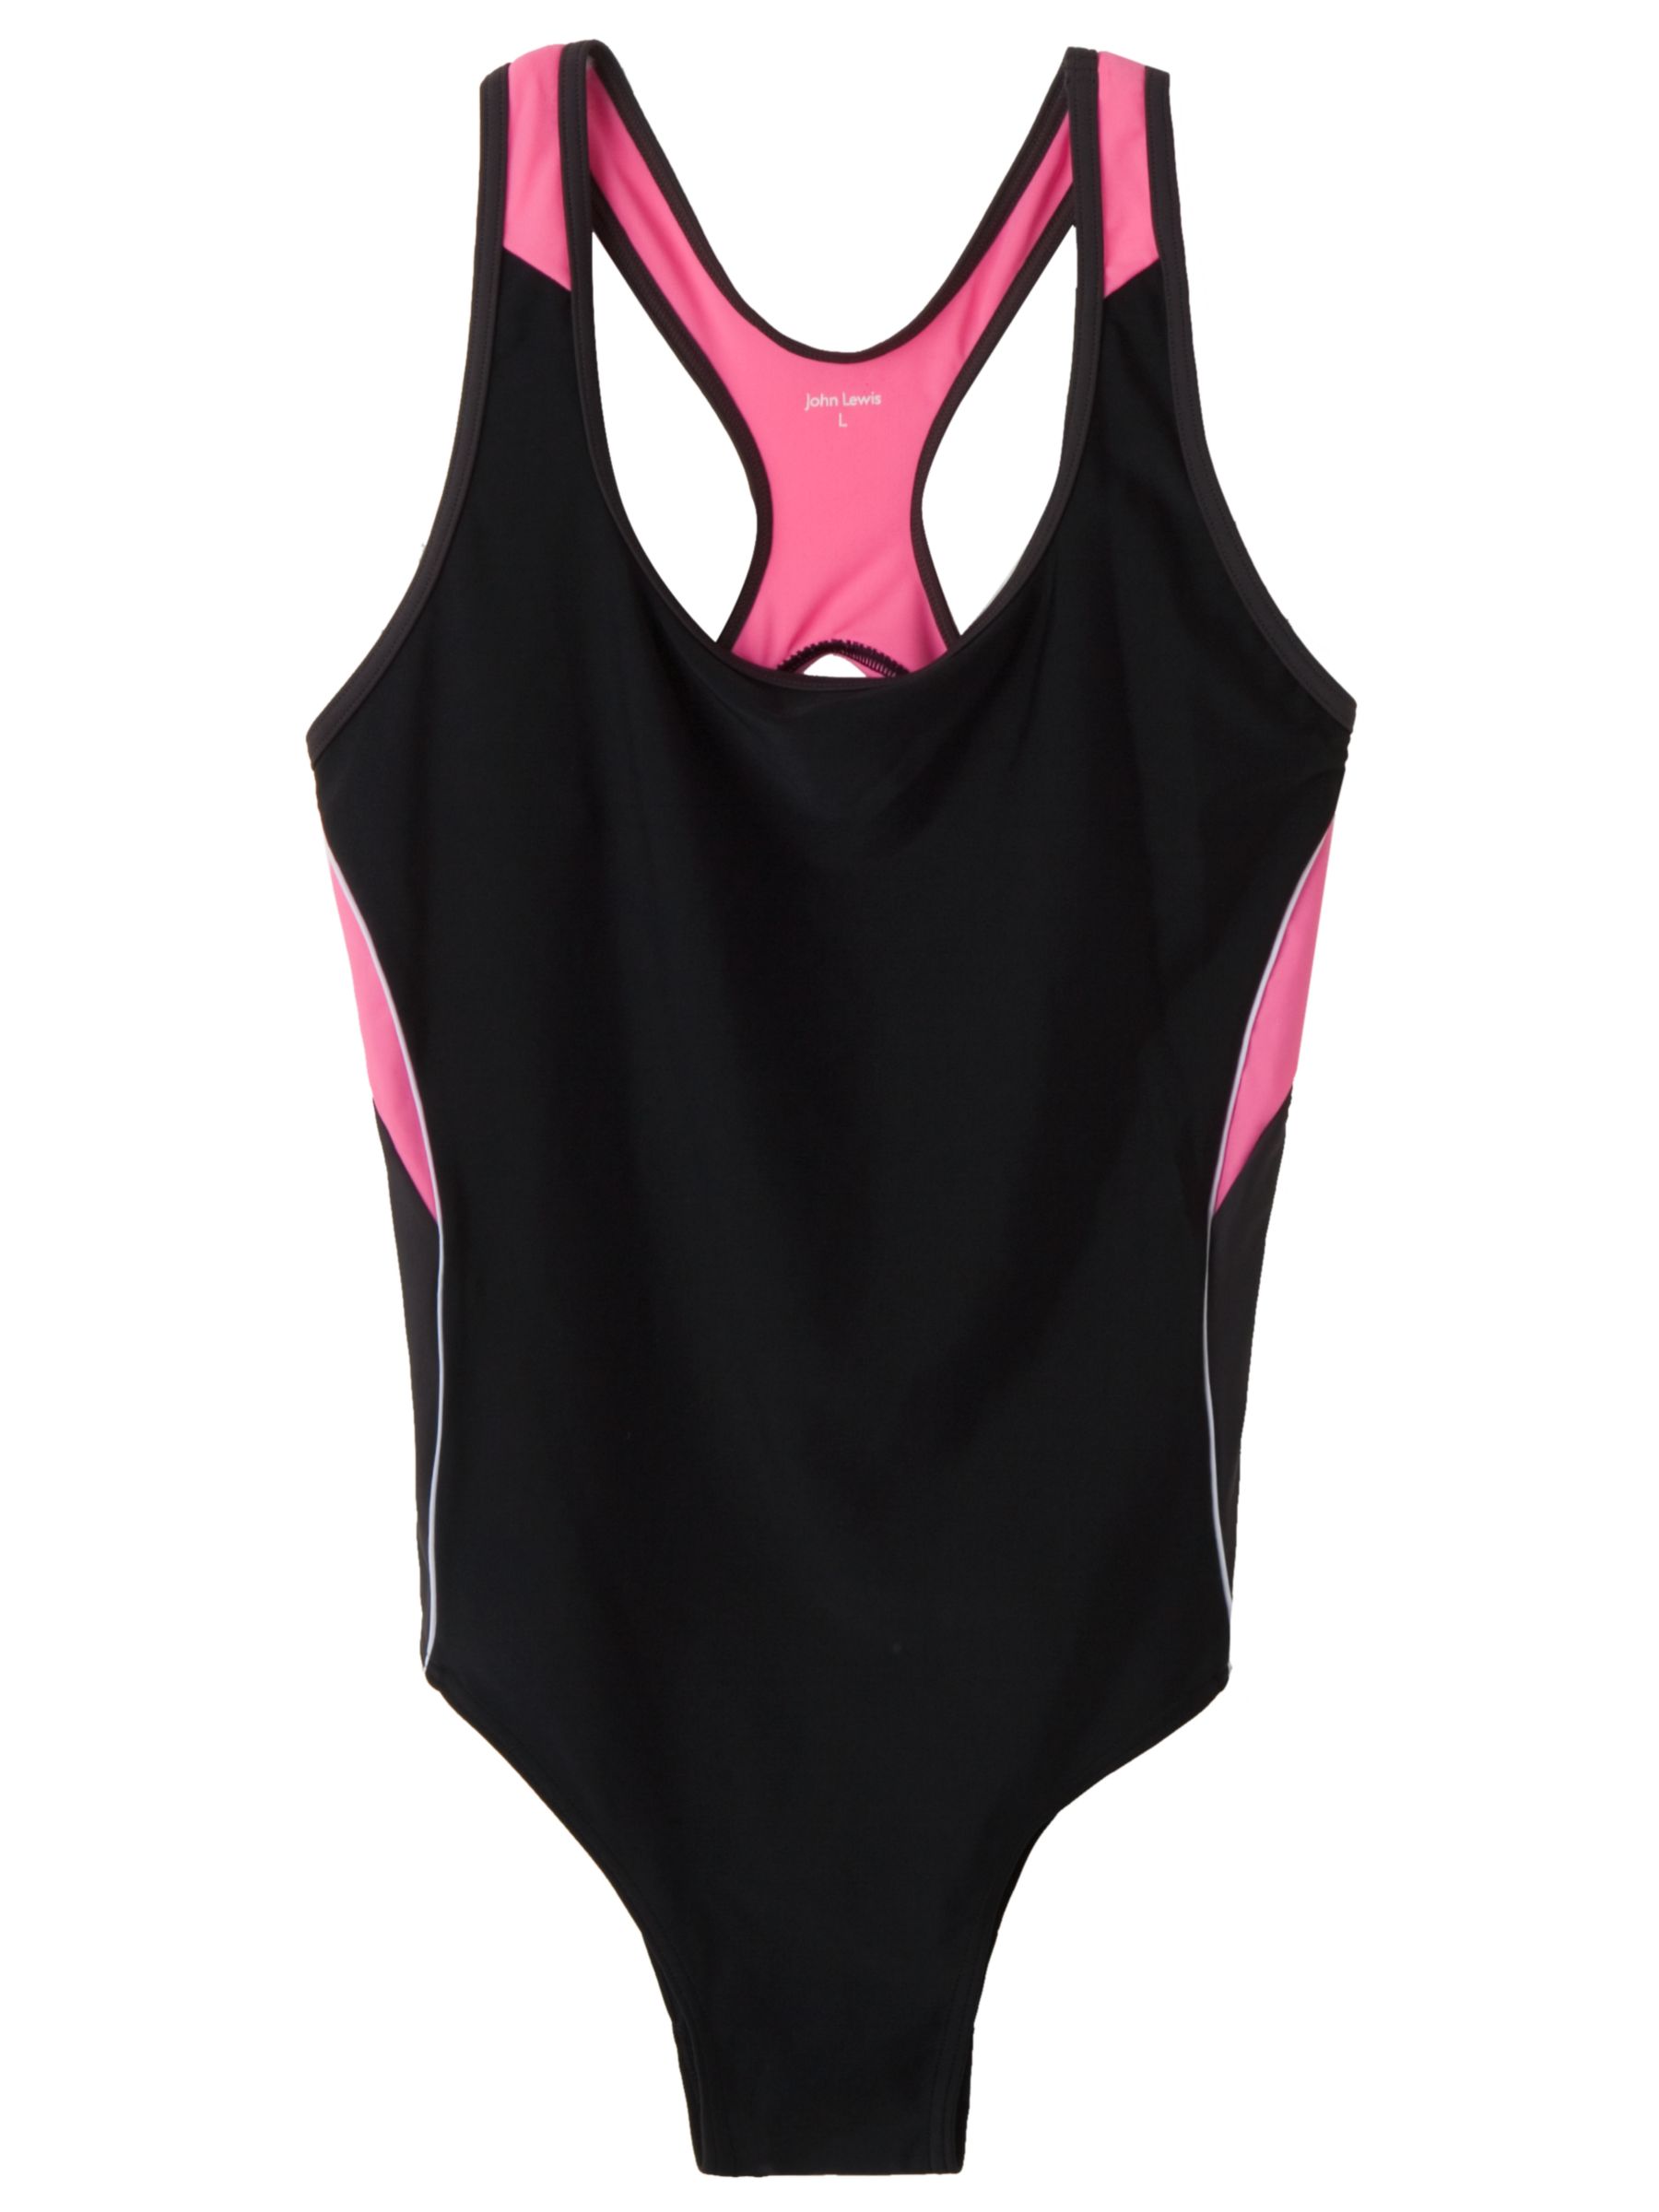 John Lewis Racer Back Swimsuit, Black/Pink, XL